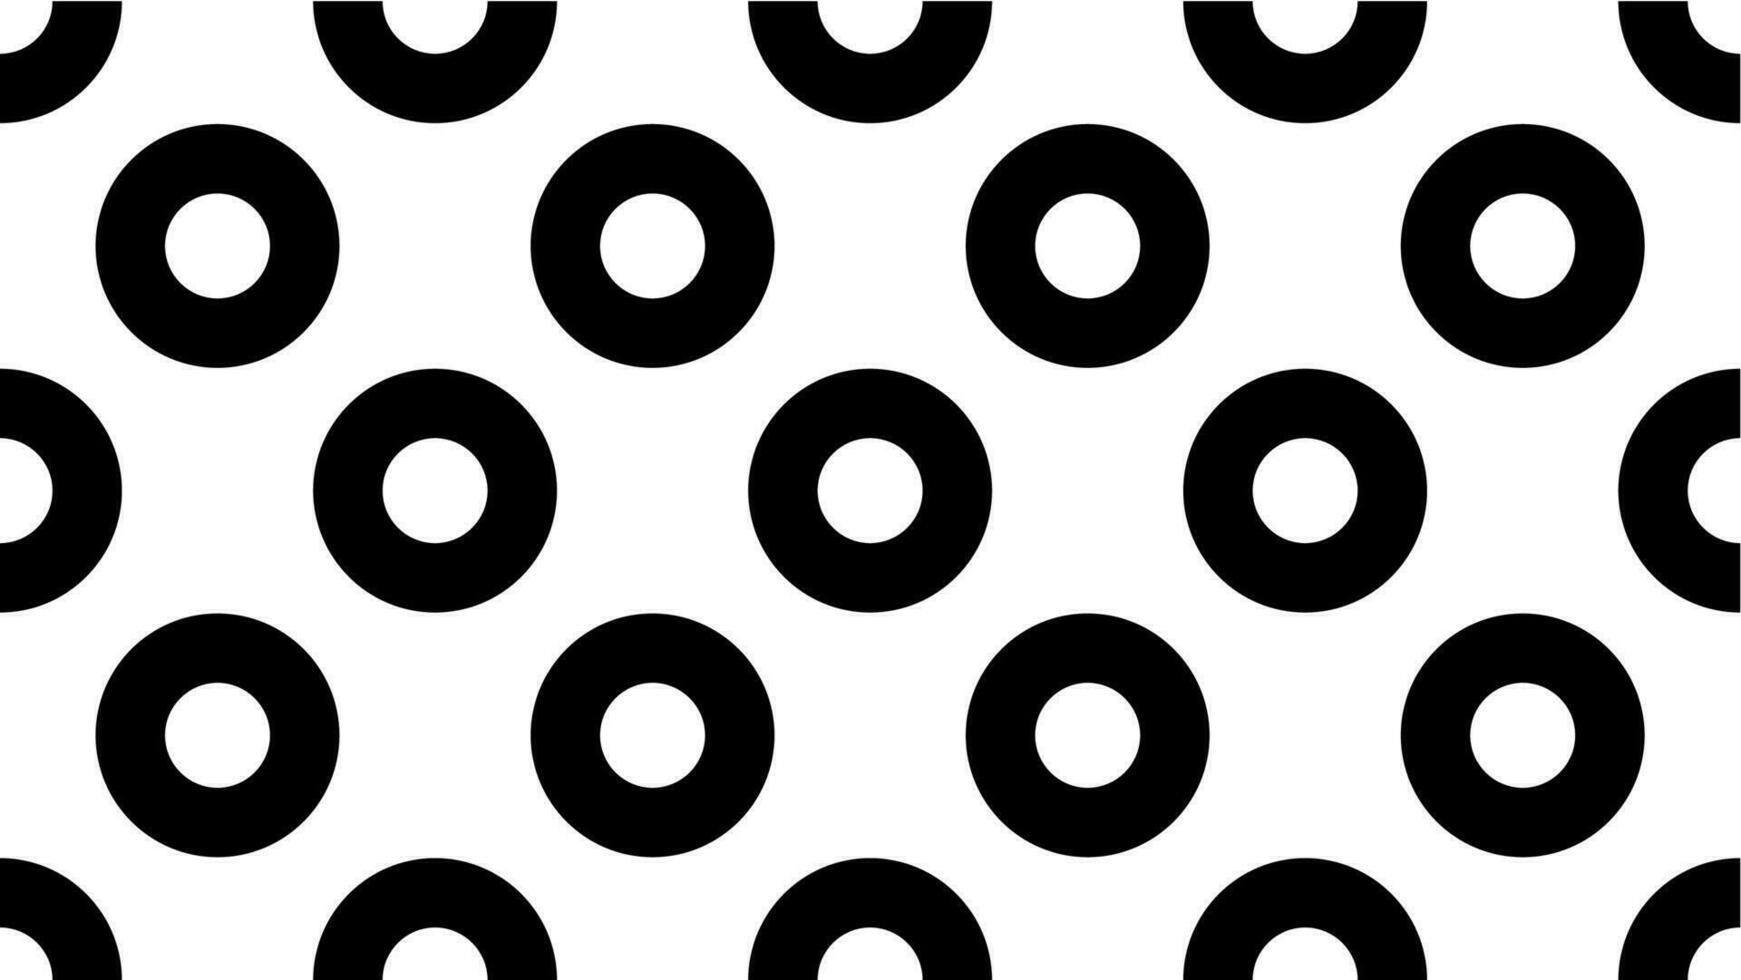 Seamless geometric patter with black circles on white background tile overlap. 80s-90s retro design. Vector illustration.